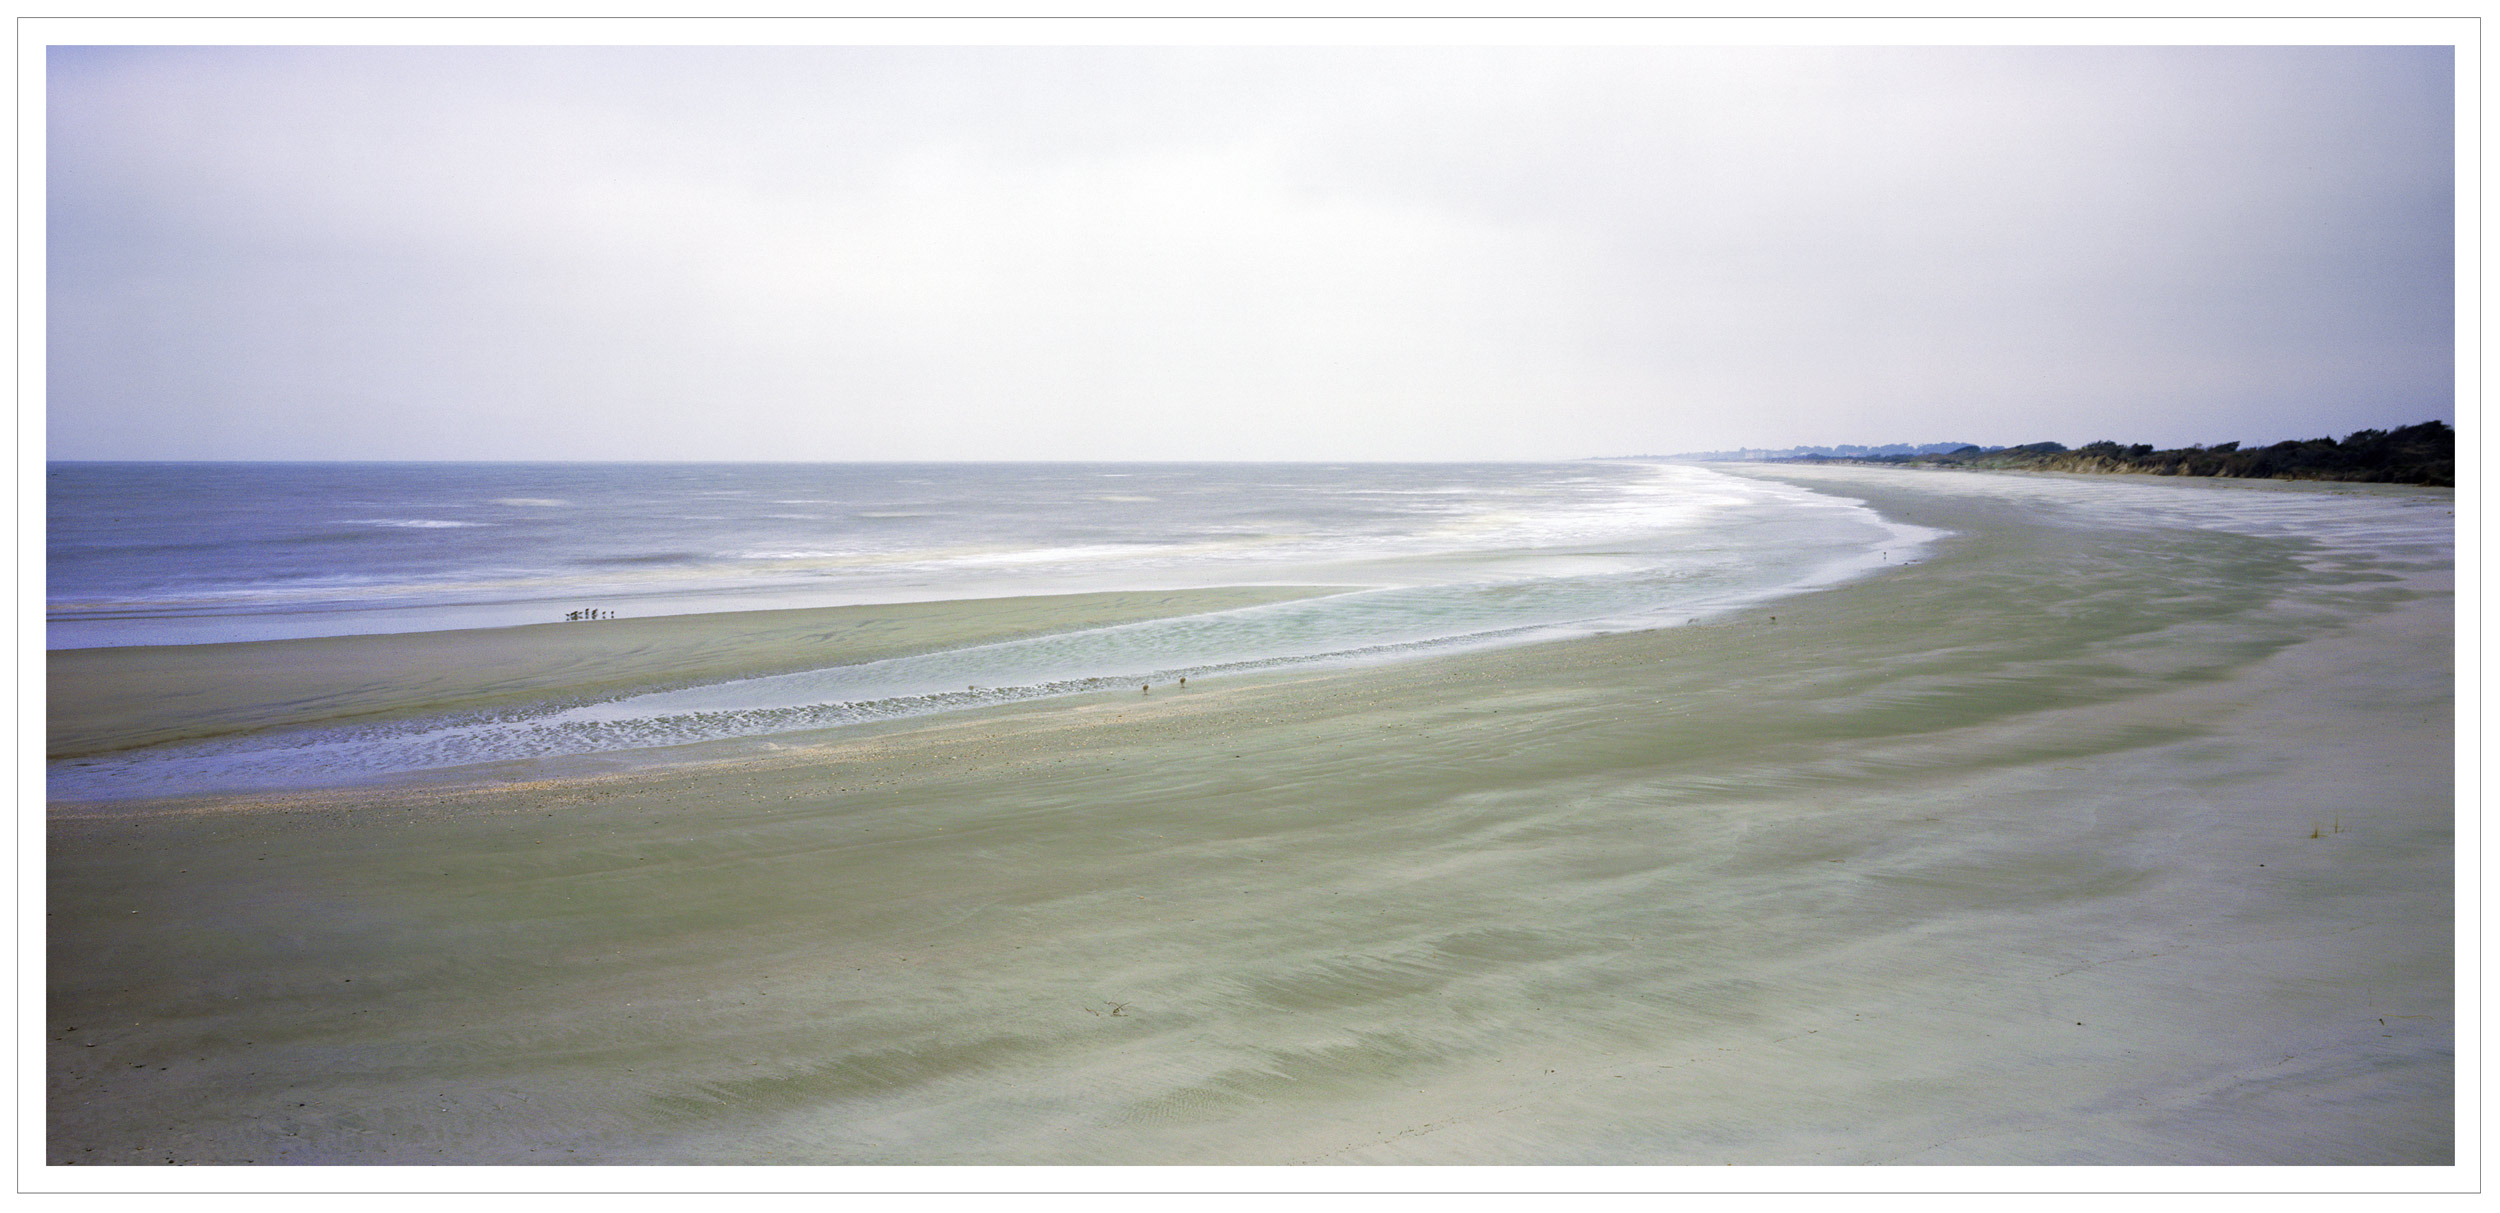 Coastal Landscape for a print campaign for Sea Island Resort